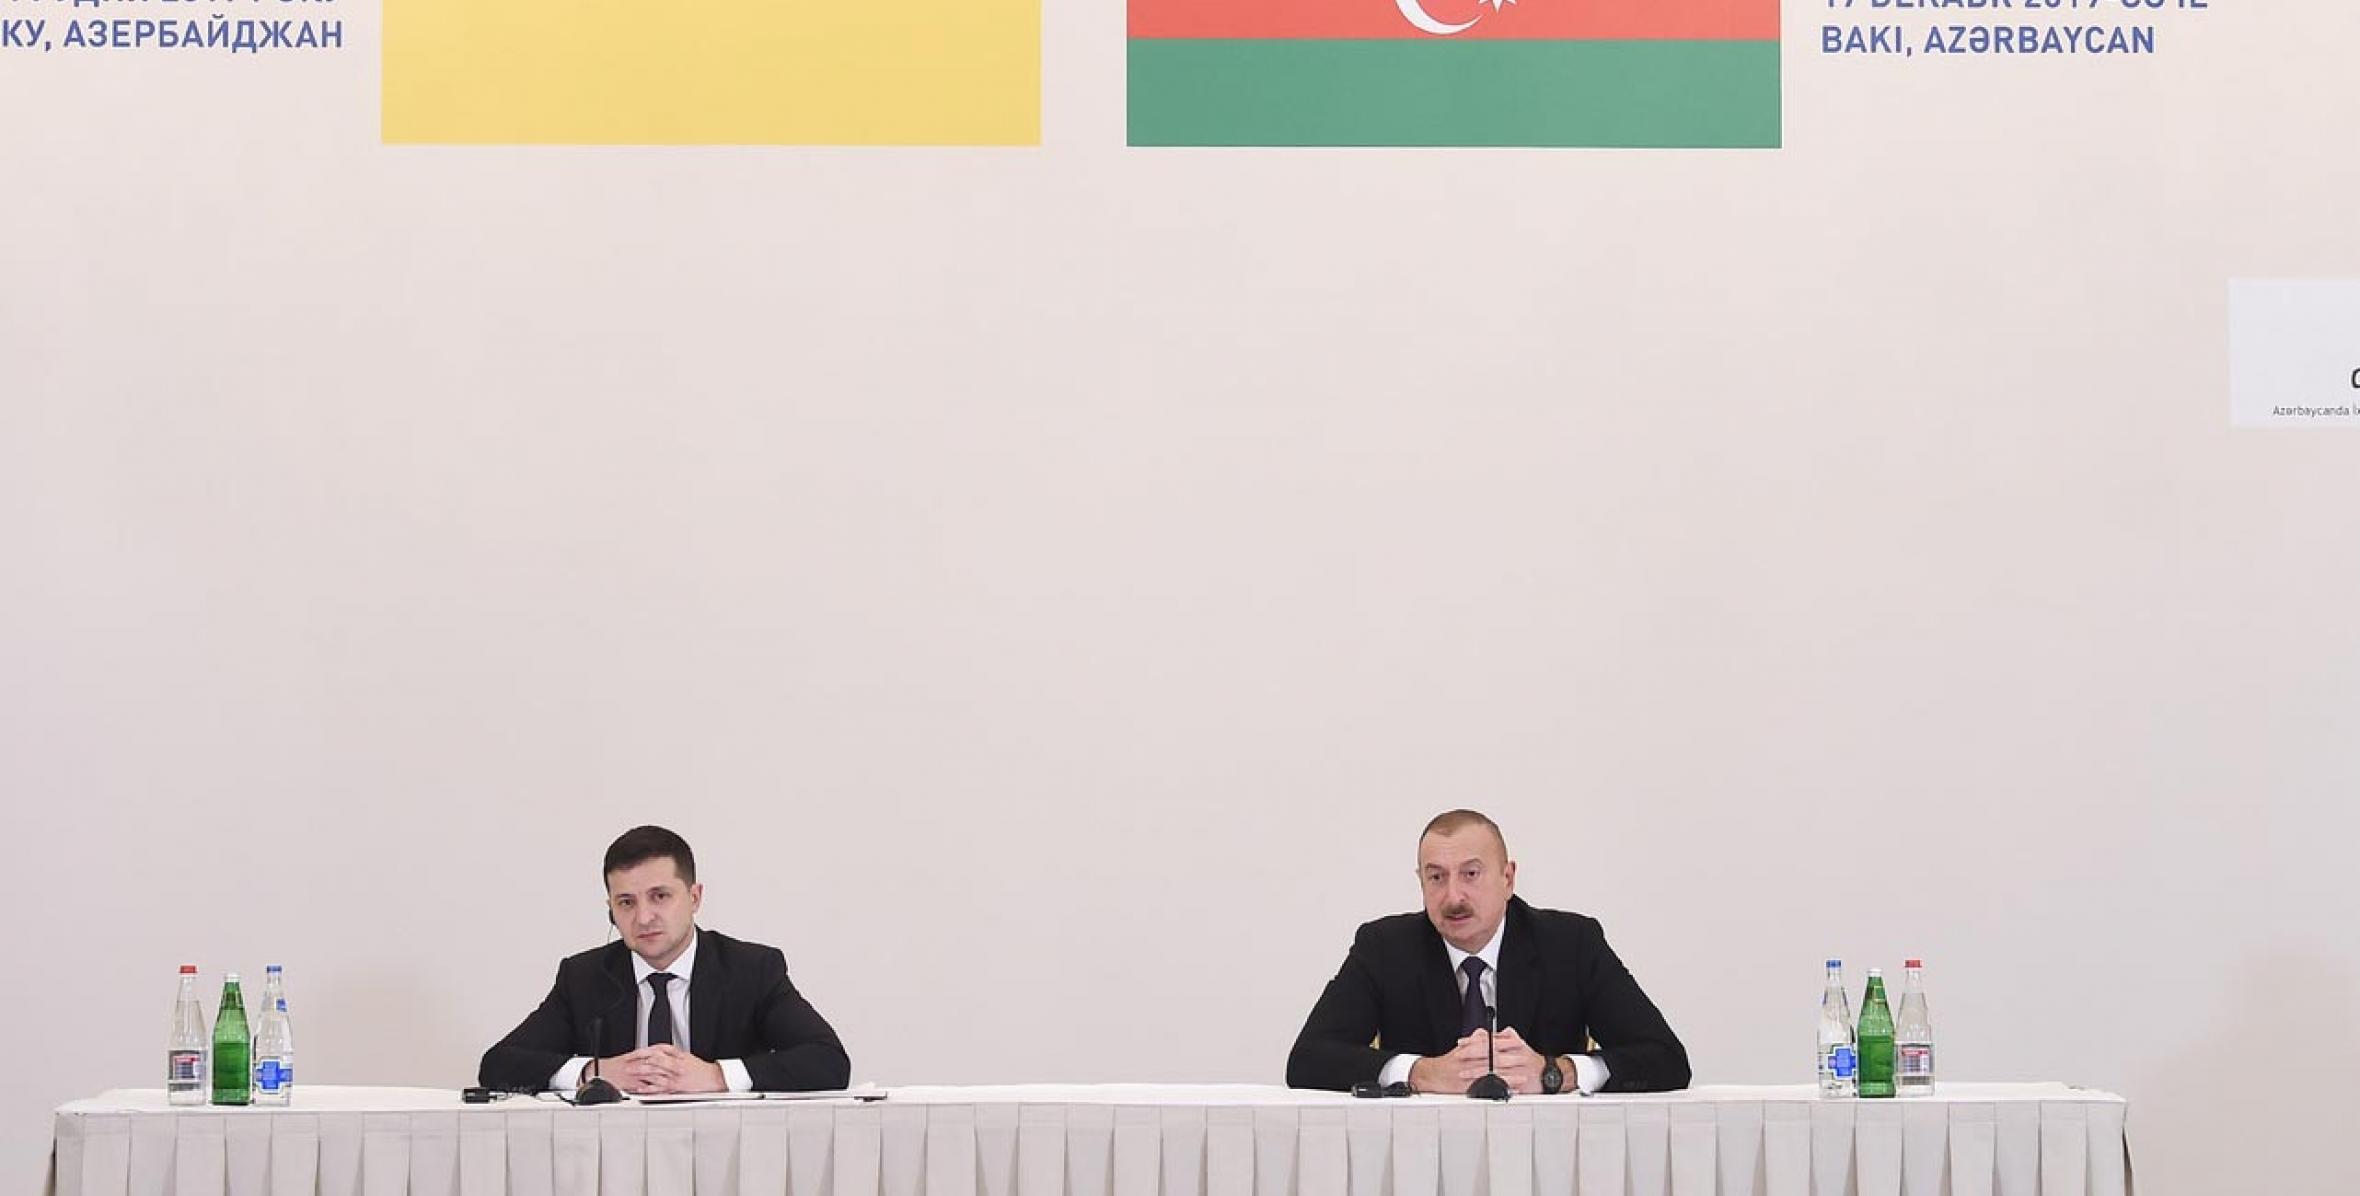 Speech by Ilham Aliyev at the Azerbaijan-Ukraine business forum